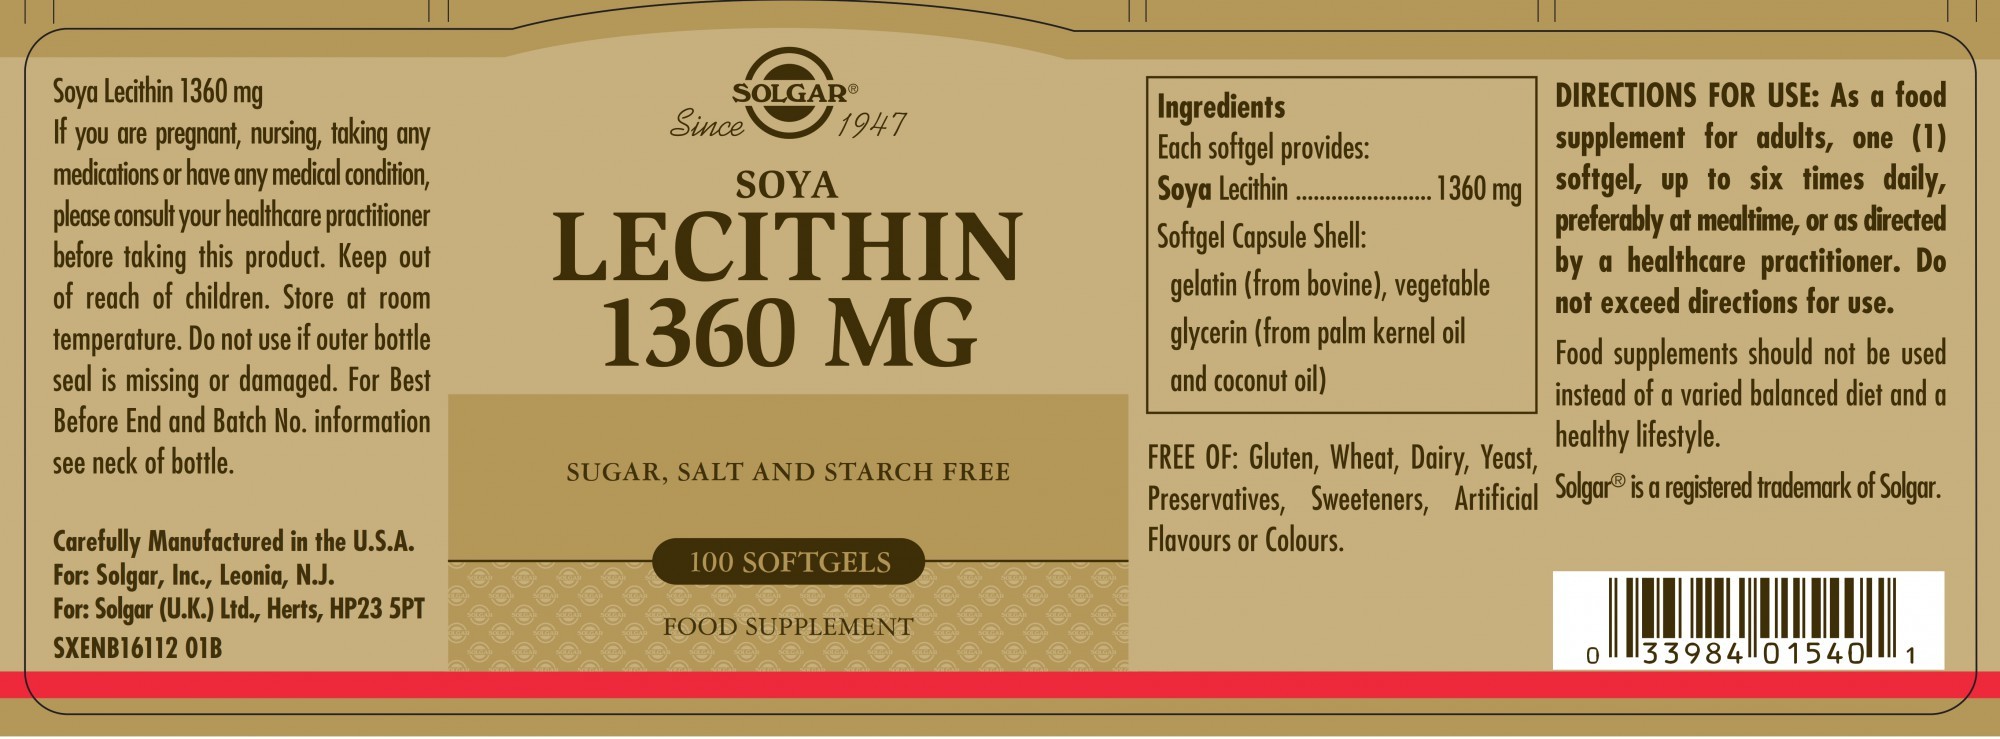 Solgar Soya Lecithin 1360 MG